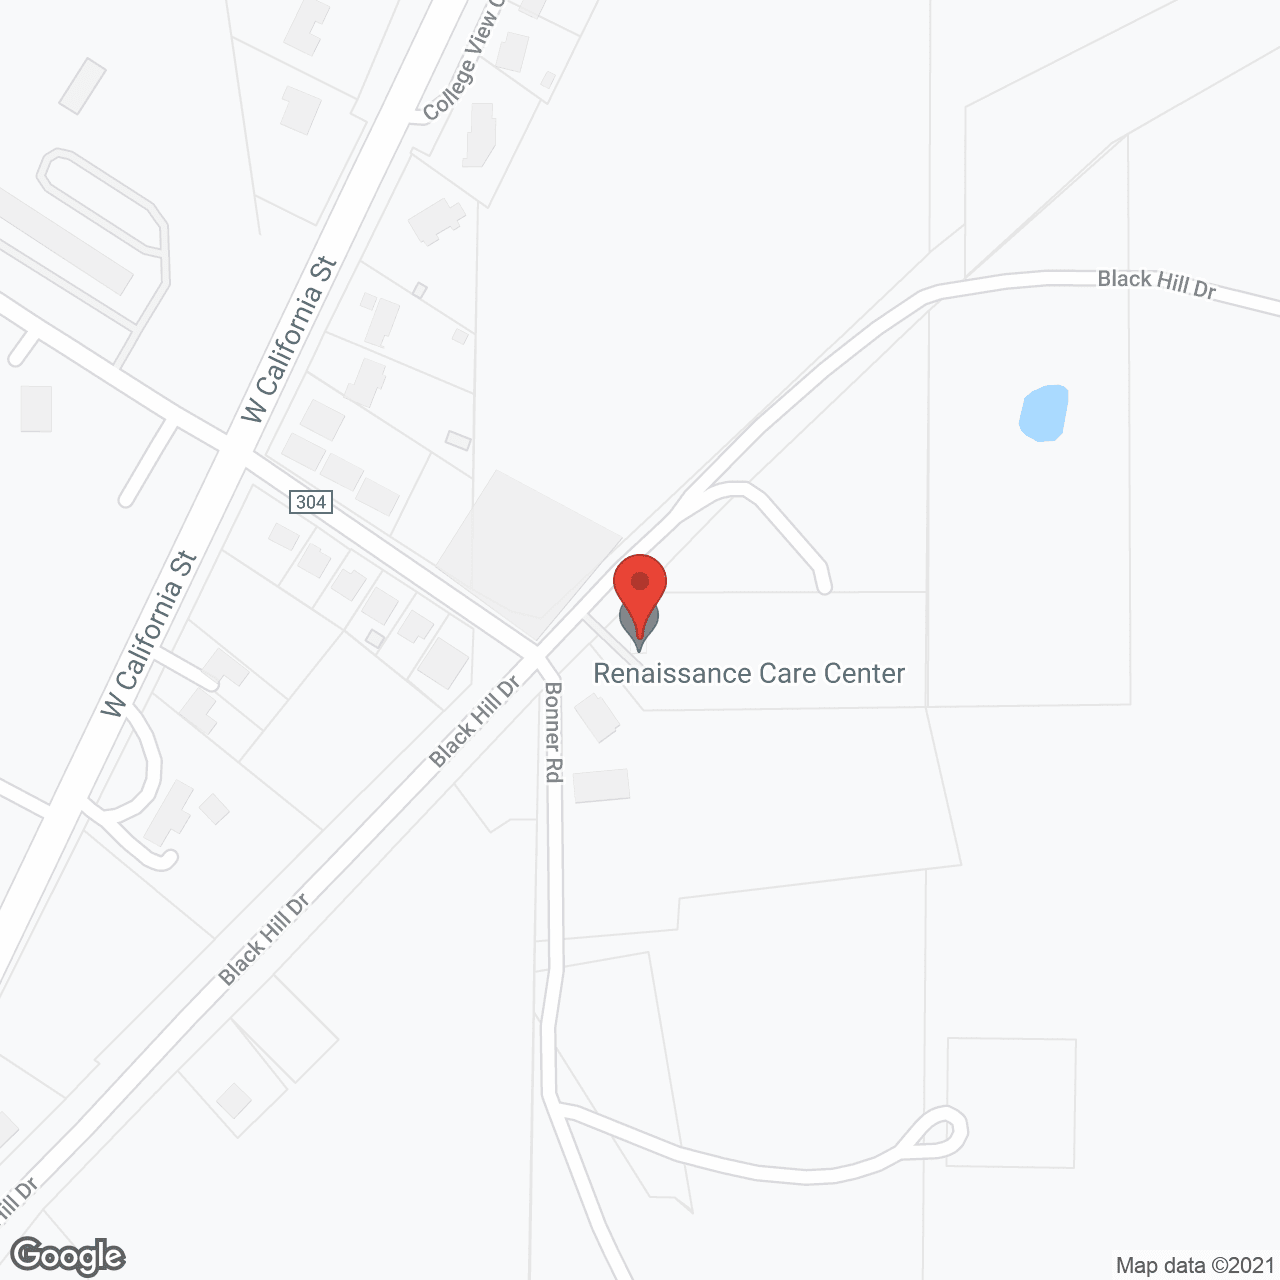 Renaissance Care Center in google map